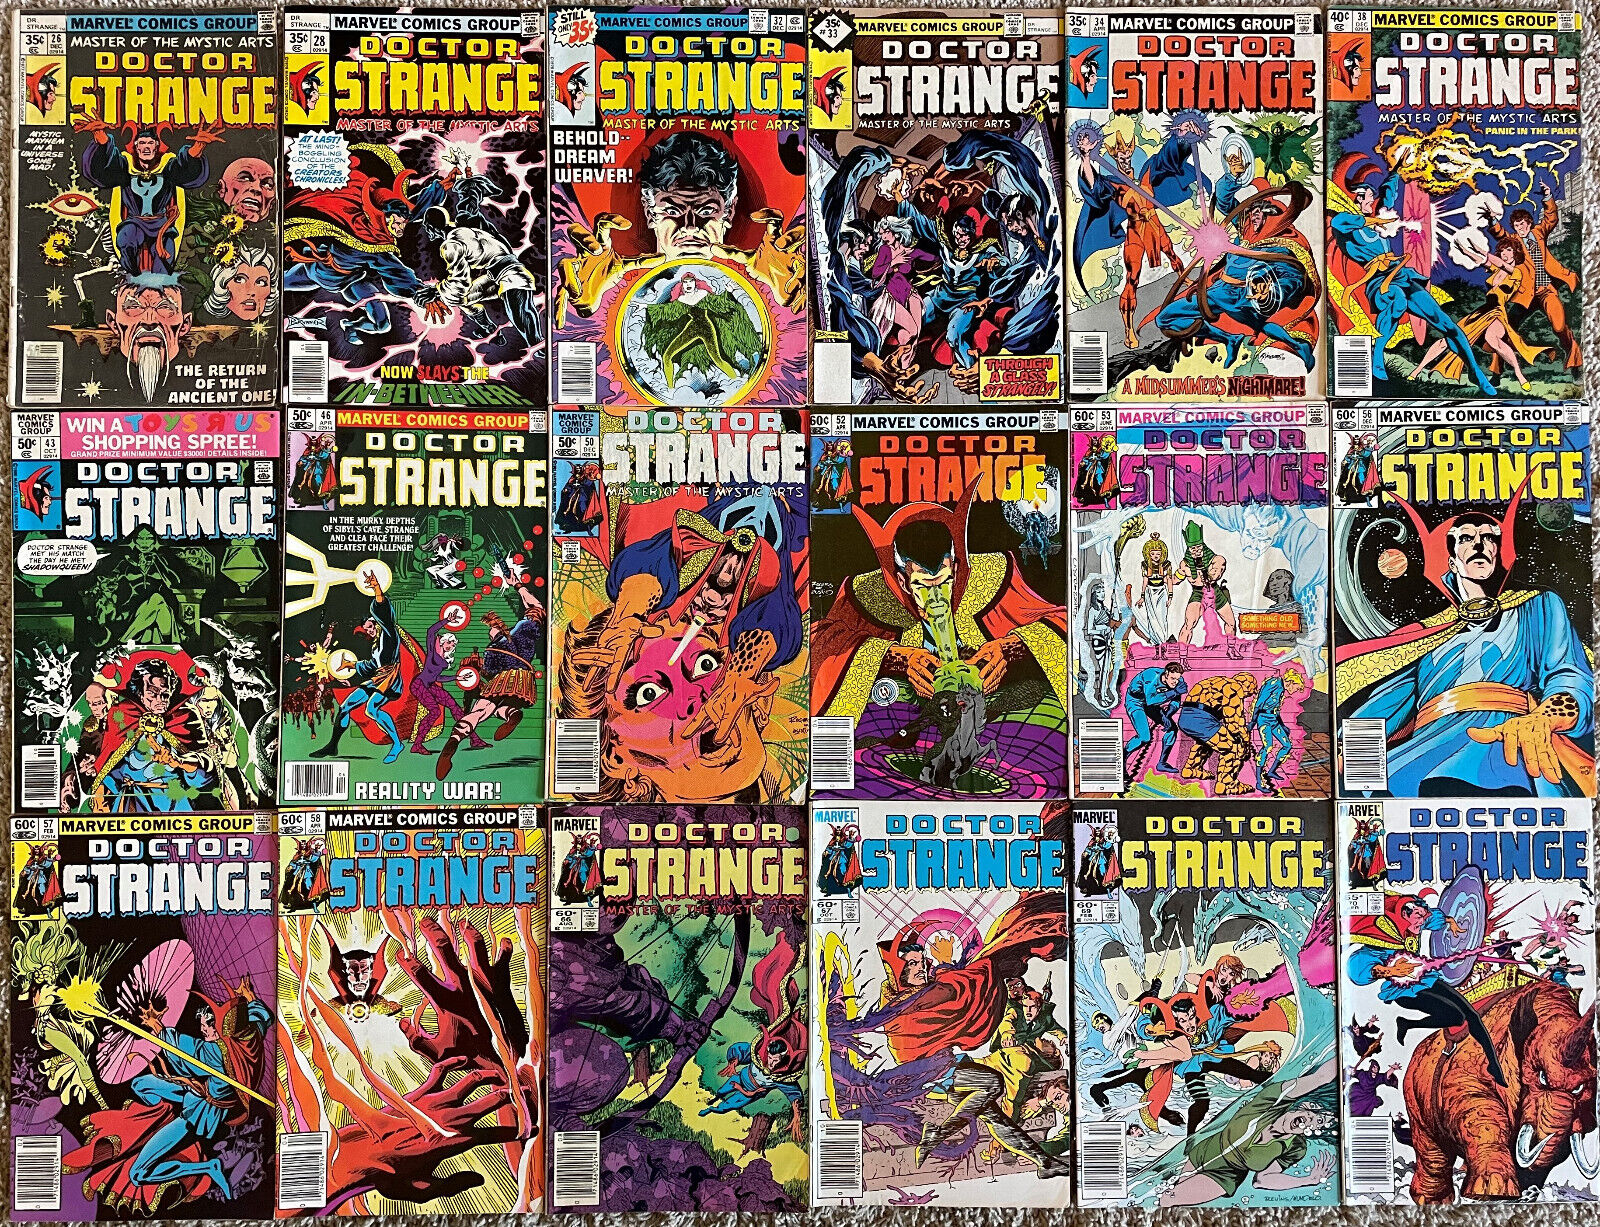 Doctor Strange Lot #1 Marvel comic series from the 1970s